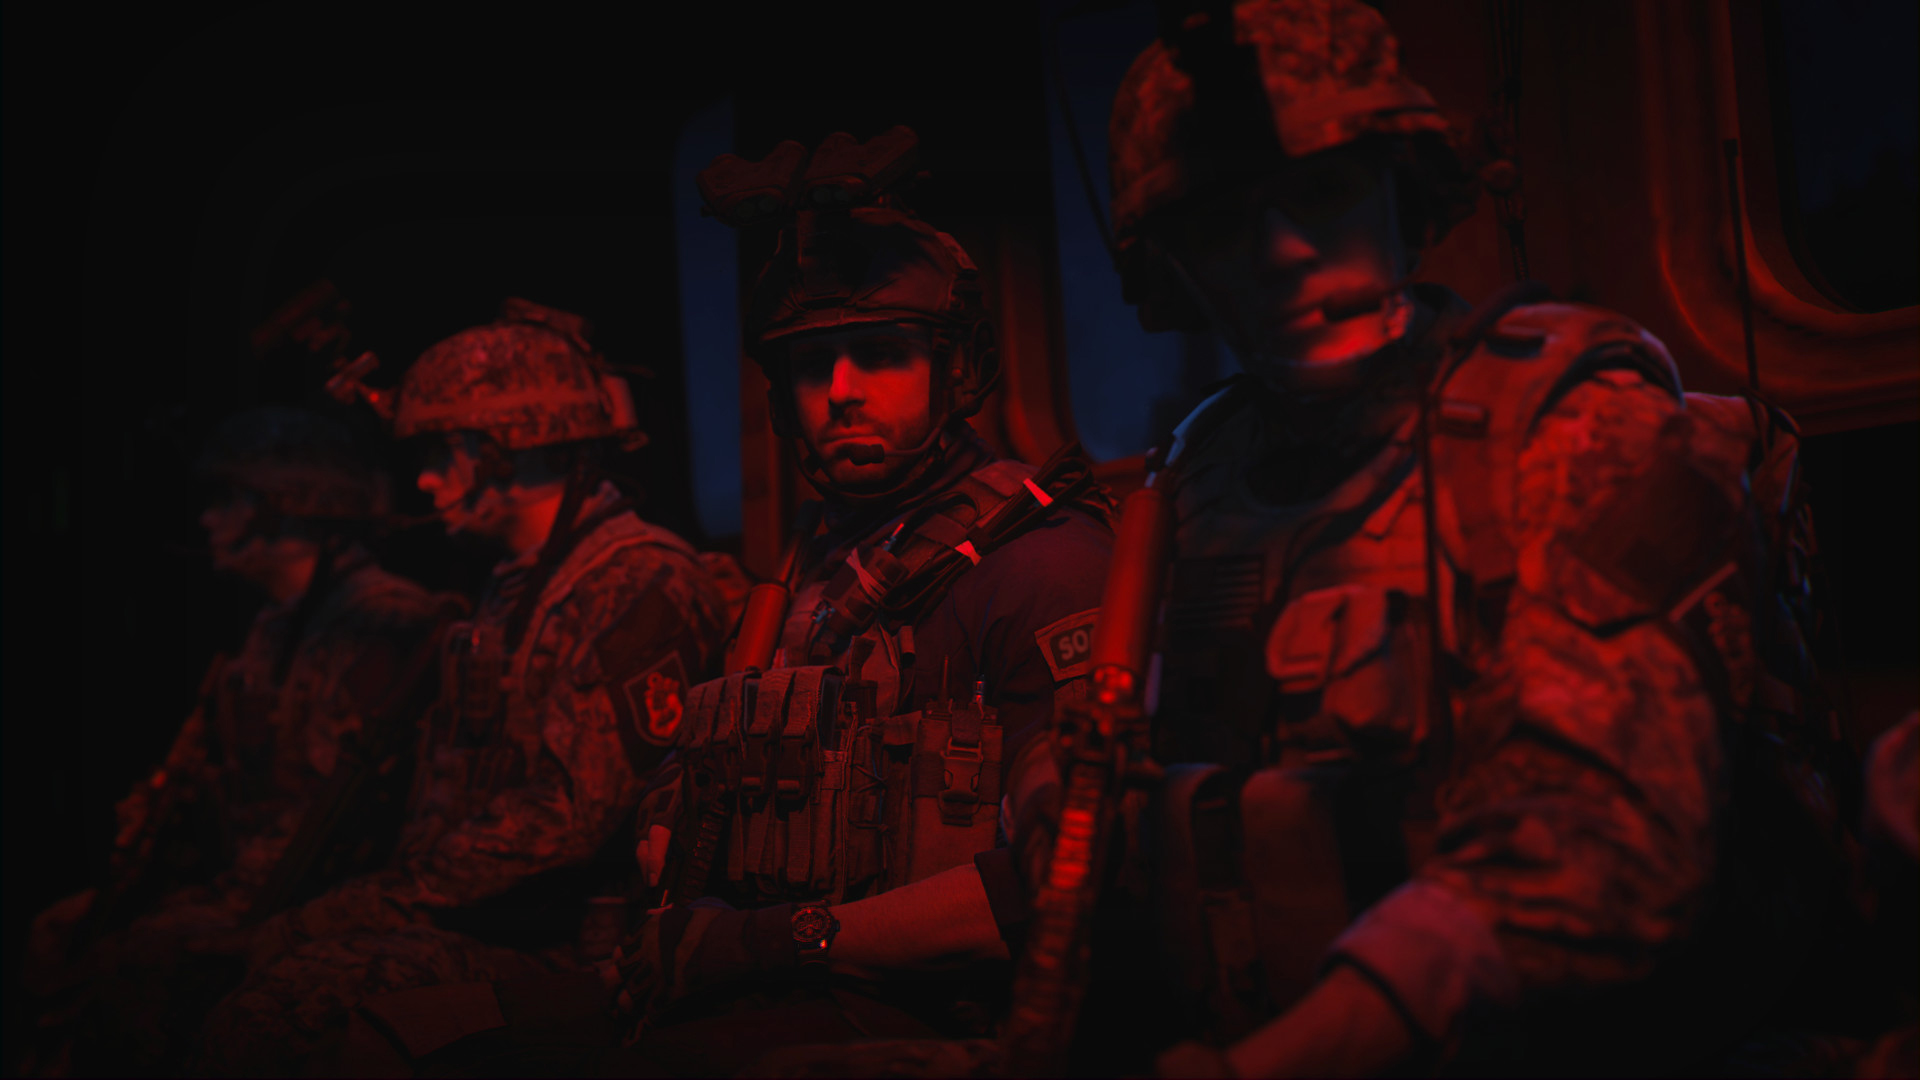 Jogo Call Of Dutty Modern Warfare II para PS5
